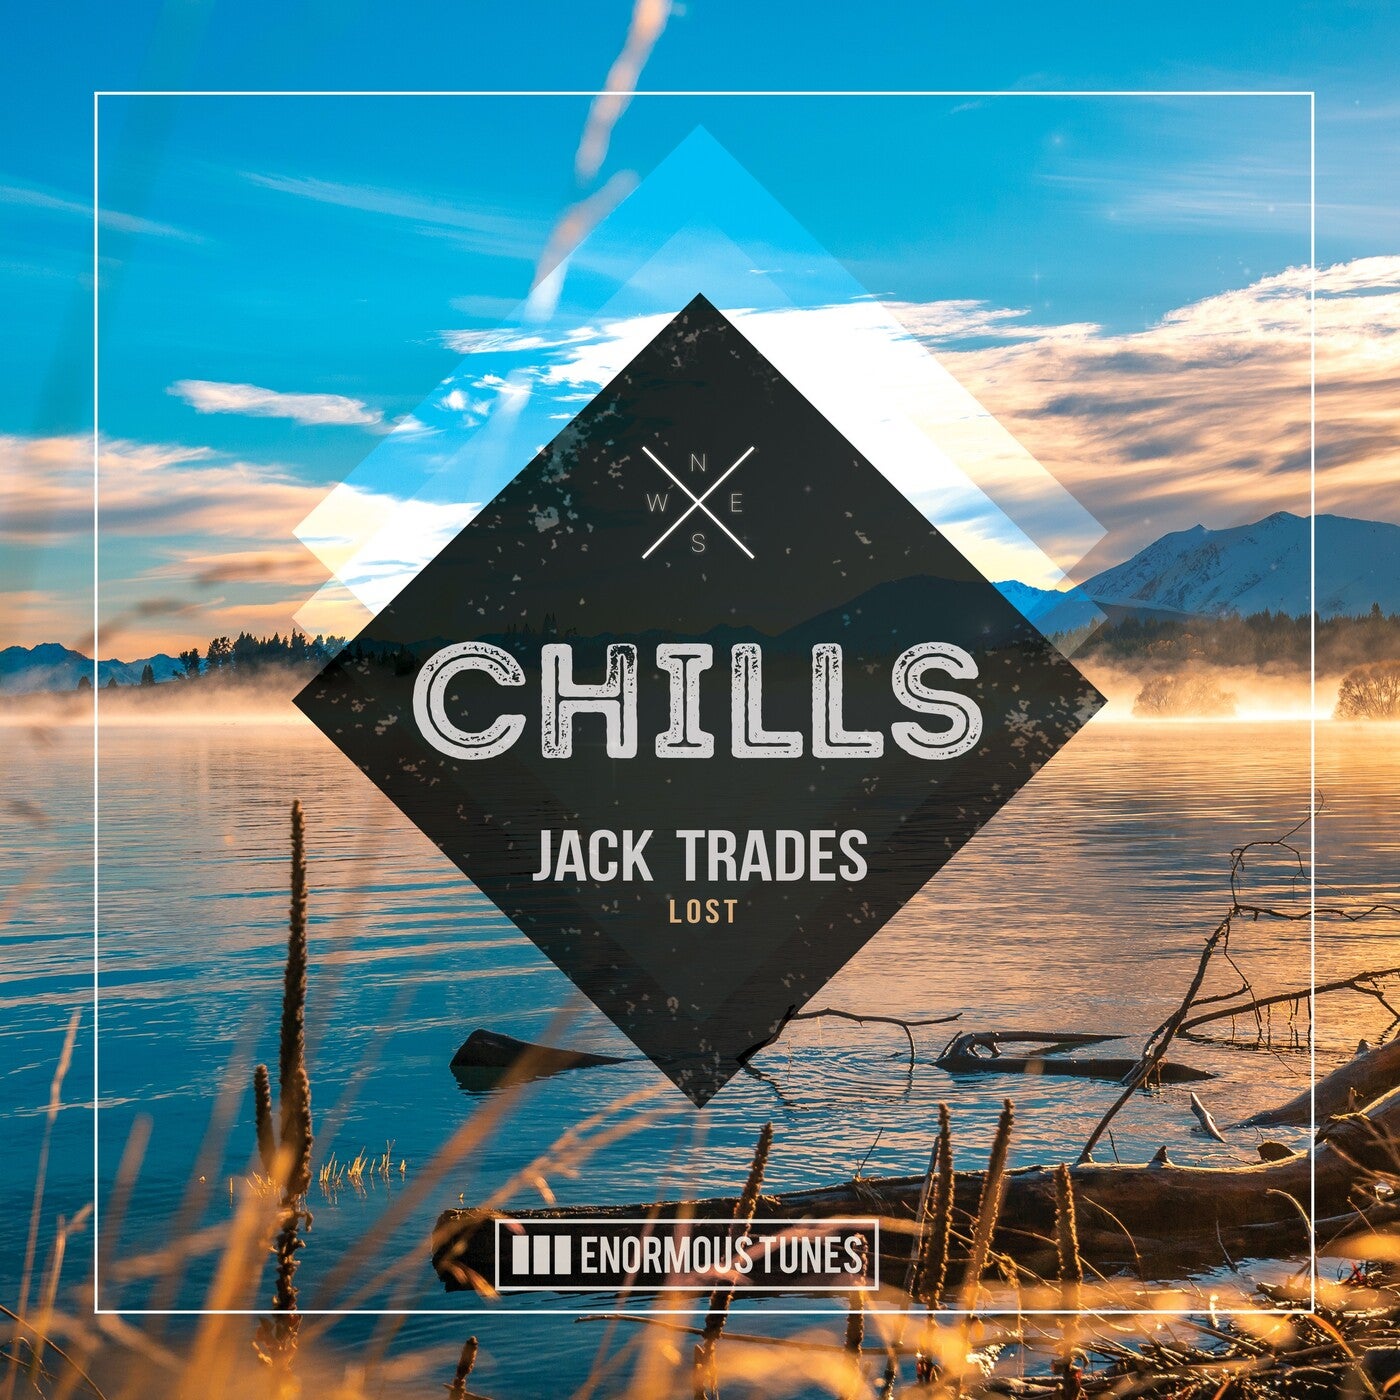 Jack Trades music download - Beatport